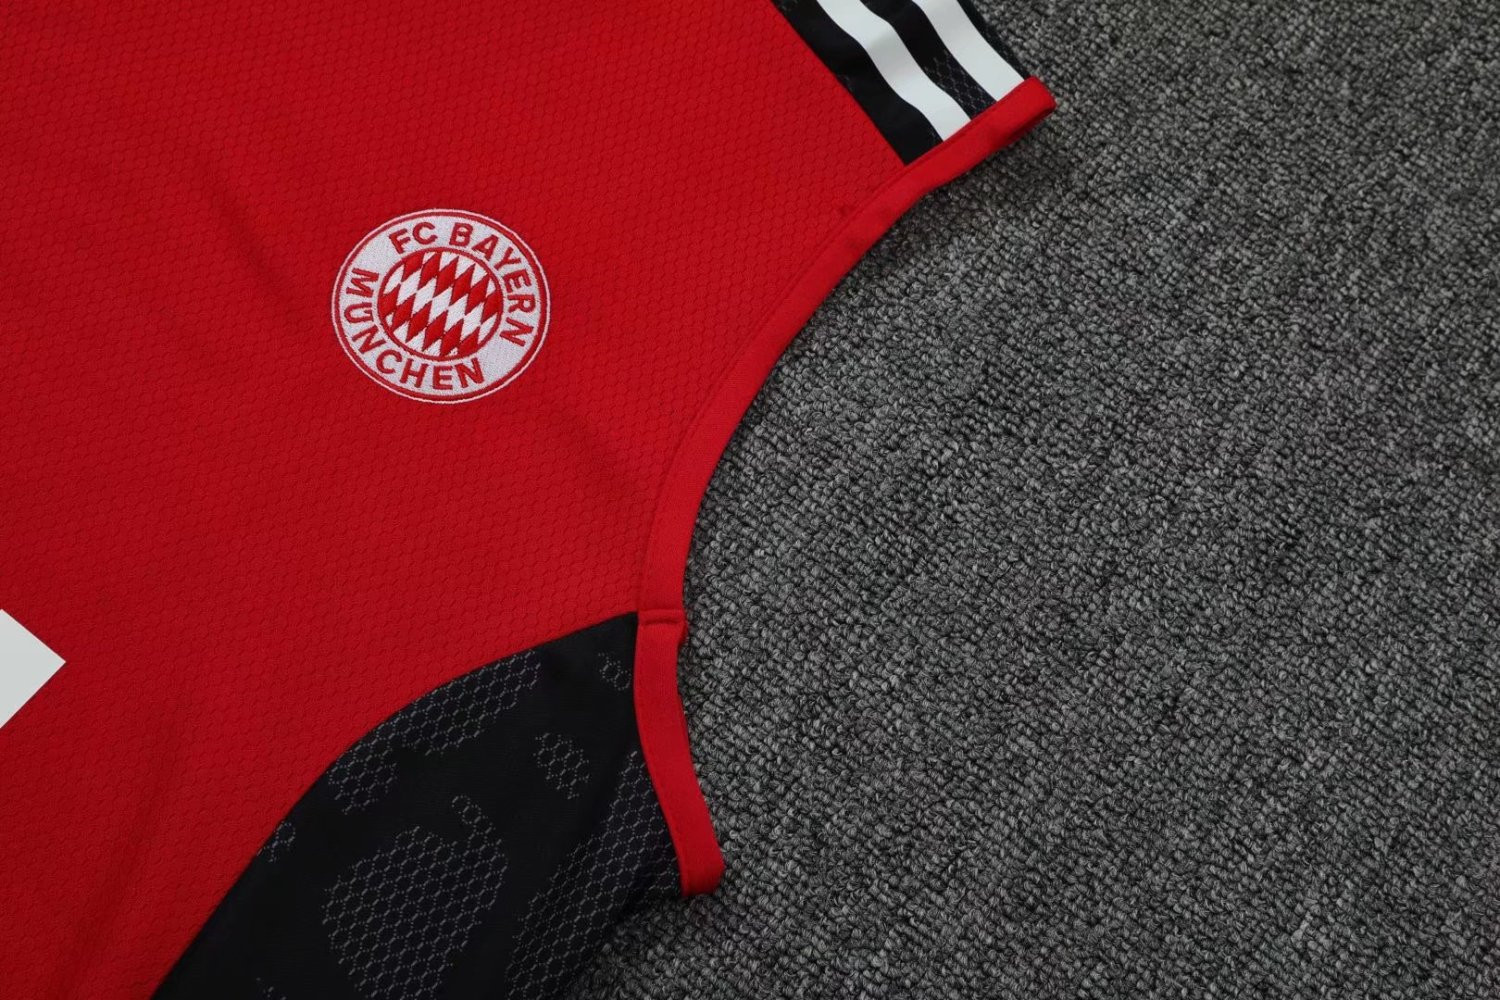 Bayern Munich Soccer Training Suit Singlet + Short Red Mens 2022/23